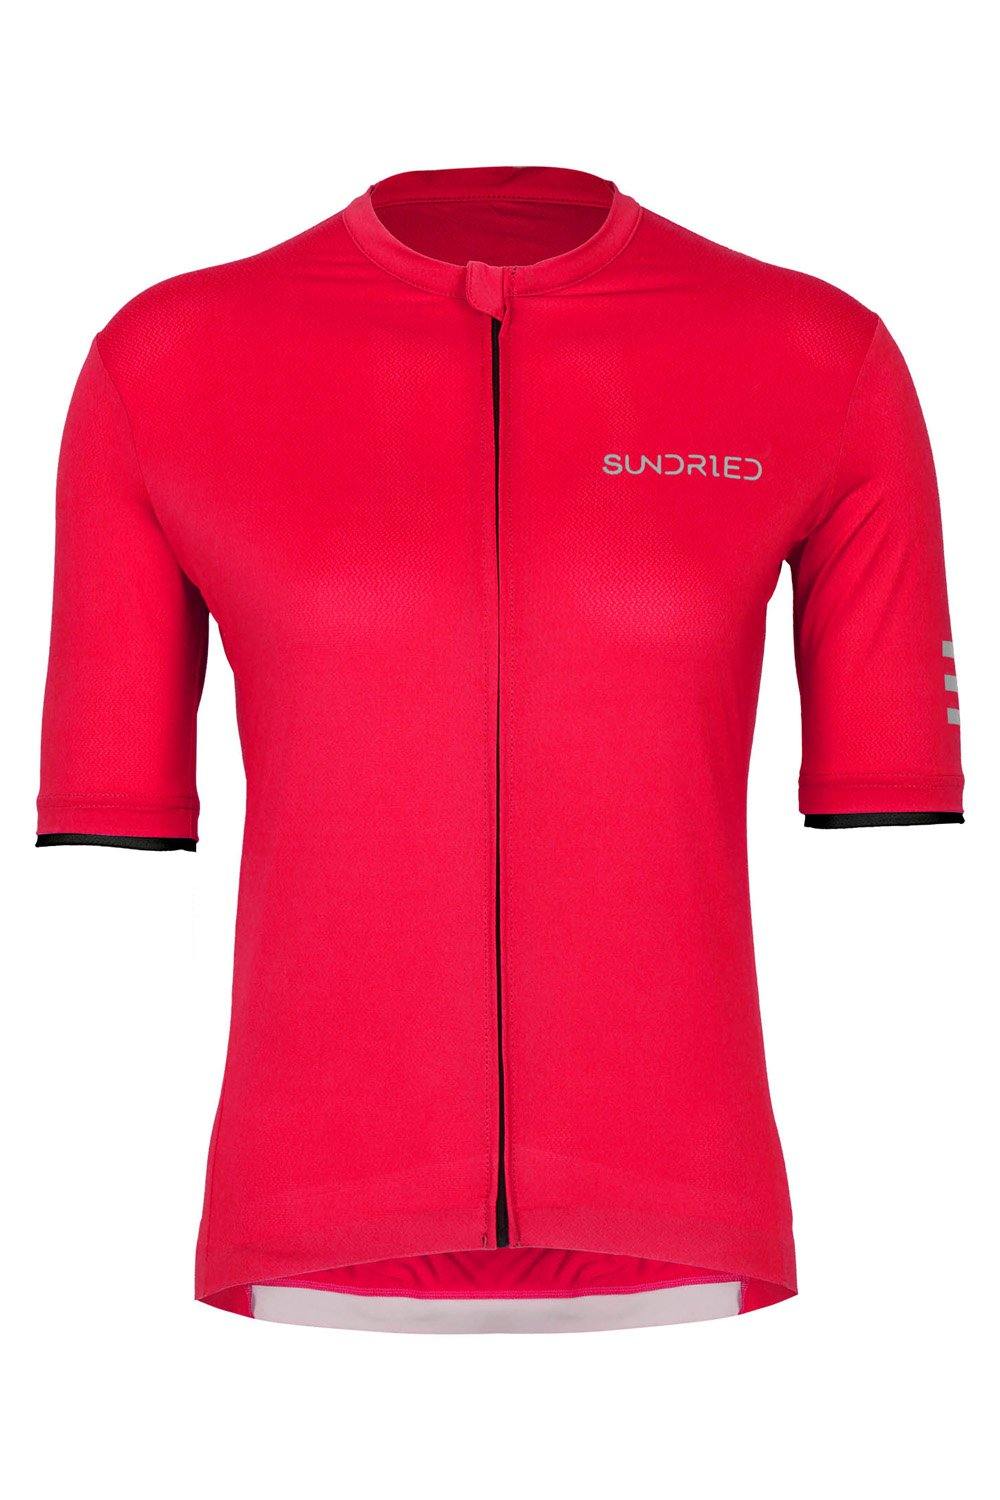 Sundried Apex Women's Short Sleeve Jersey Short Sleeve Jersey S Red SD0340 S Red Activewear